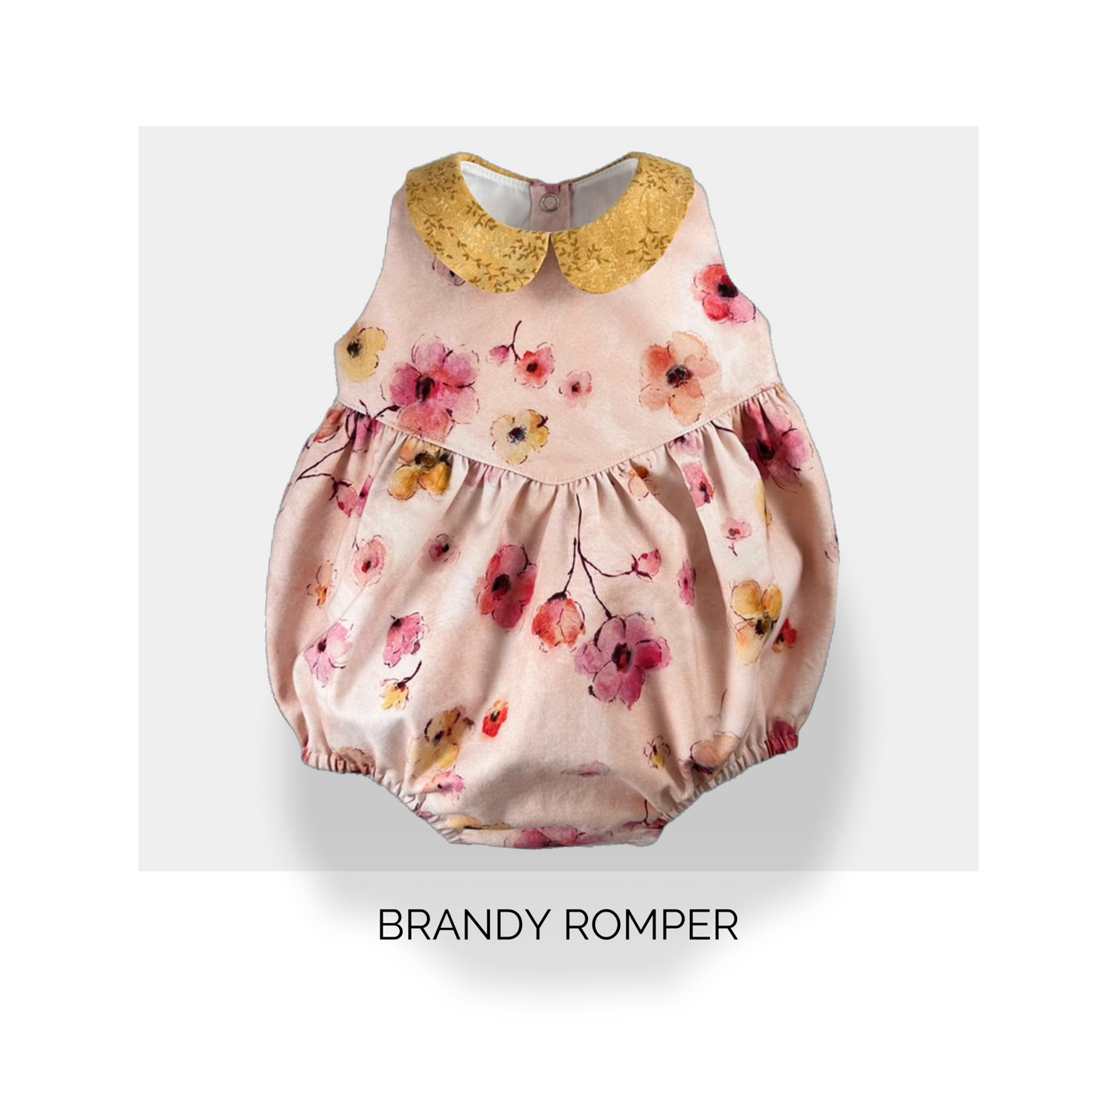 Brandy Romper